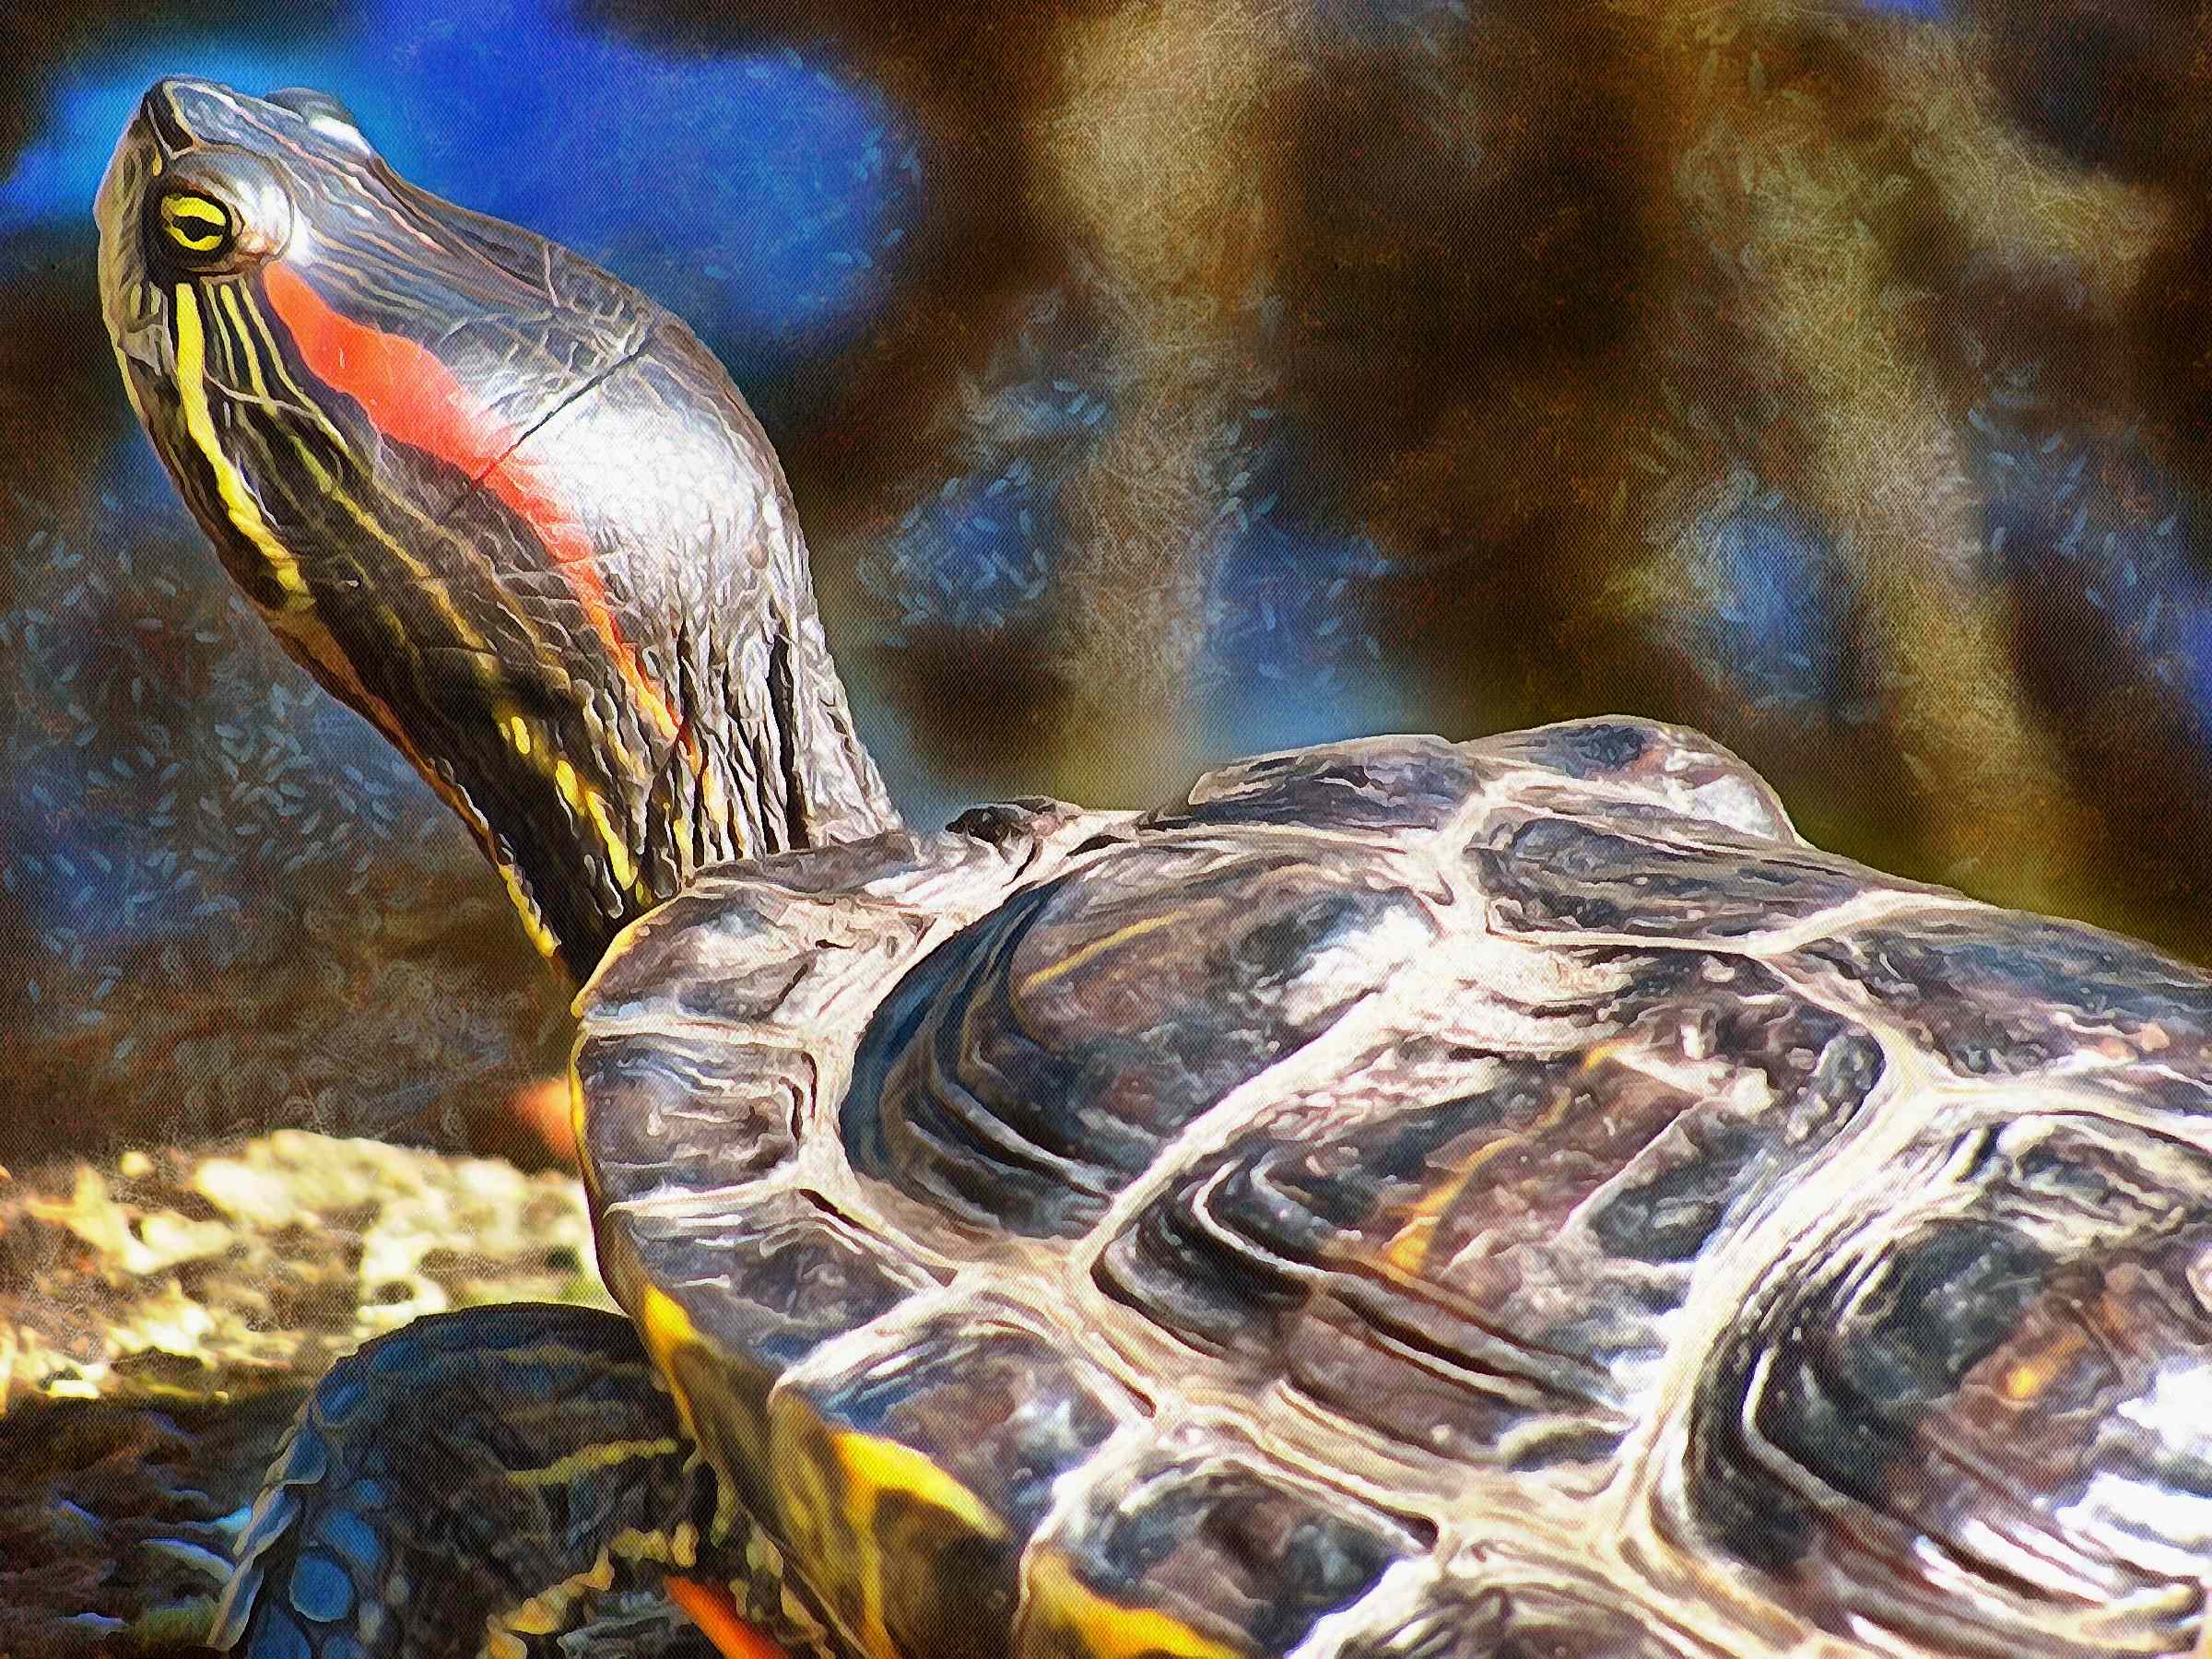 Turtle, Tortoise, Turtle free images,  – Tortoise free images, Tortoise free , Turtle stock free images, free images turtles, tortoise free , tortoise public domain images!